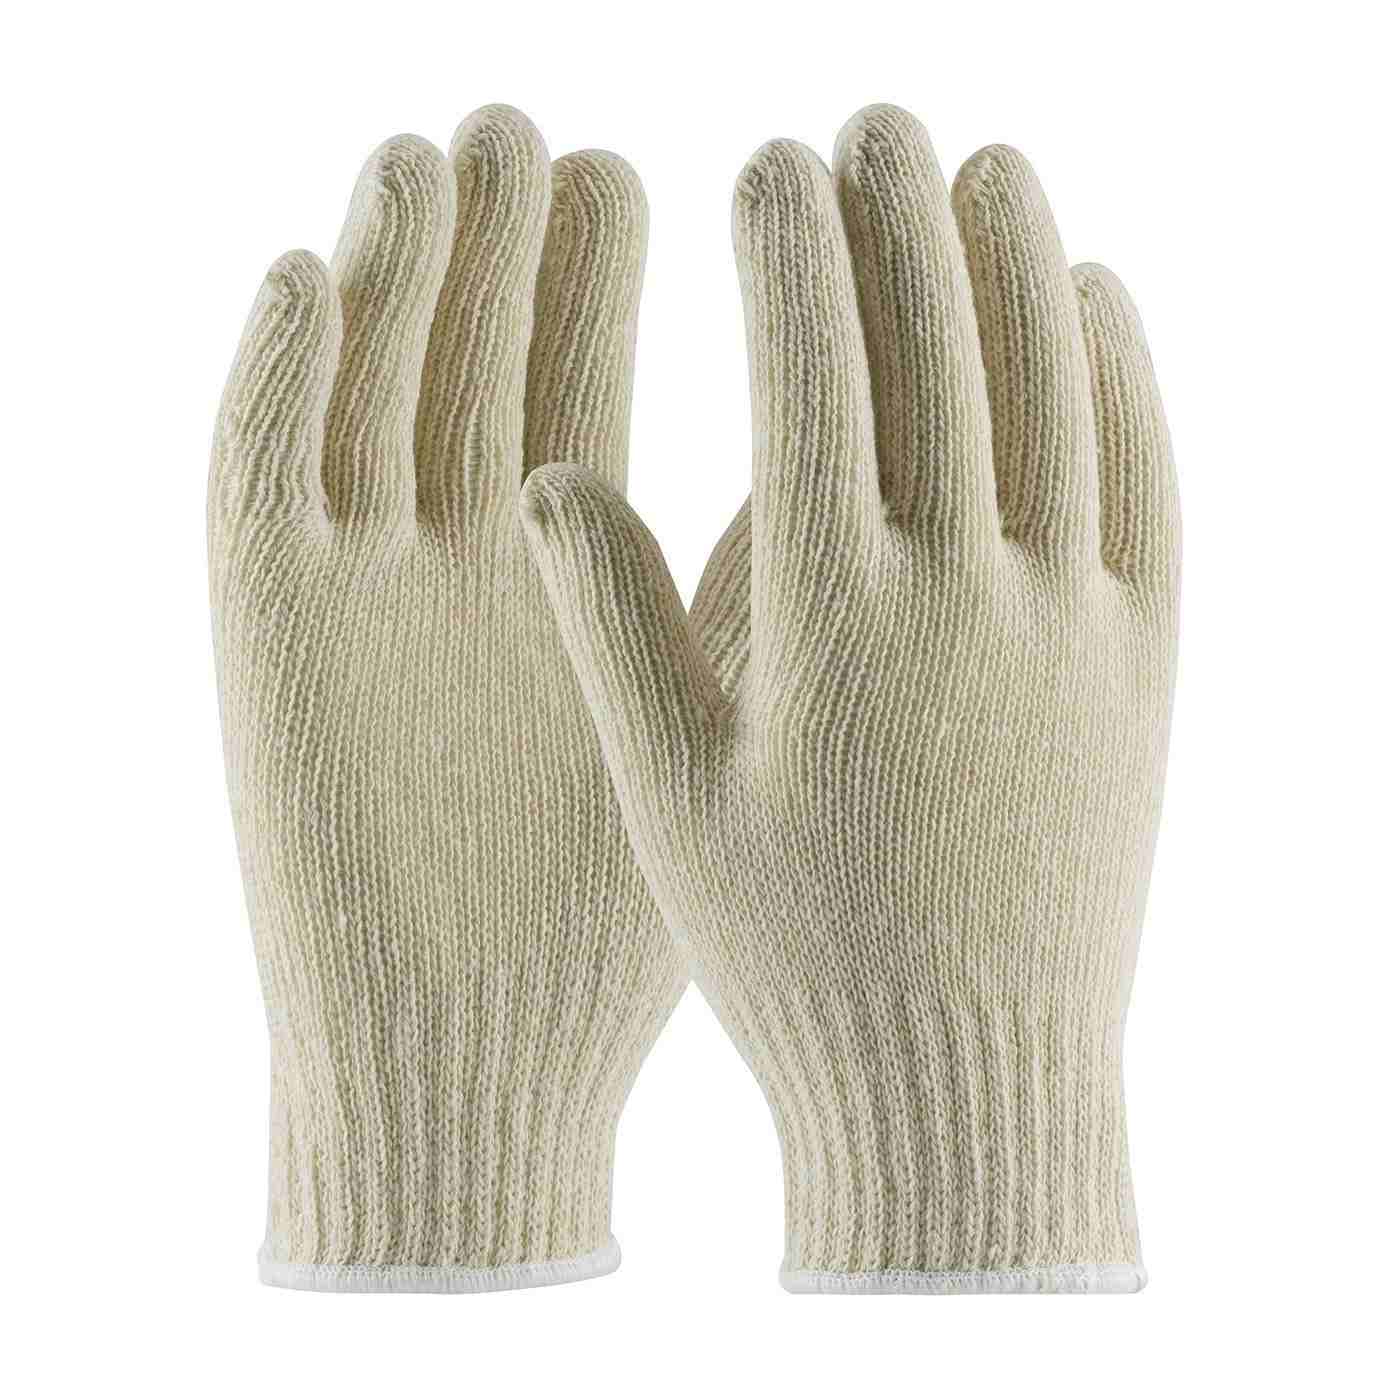 White Standard String Knit Poly/Cotton Gloves sold by the Dozen 